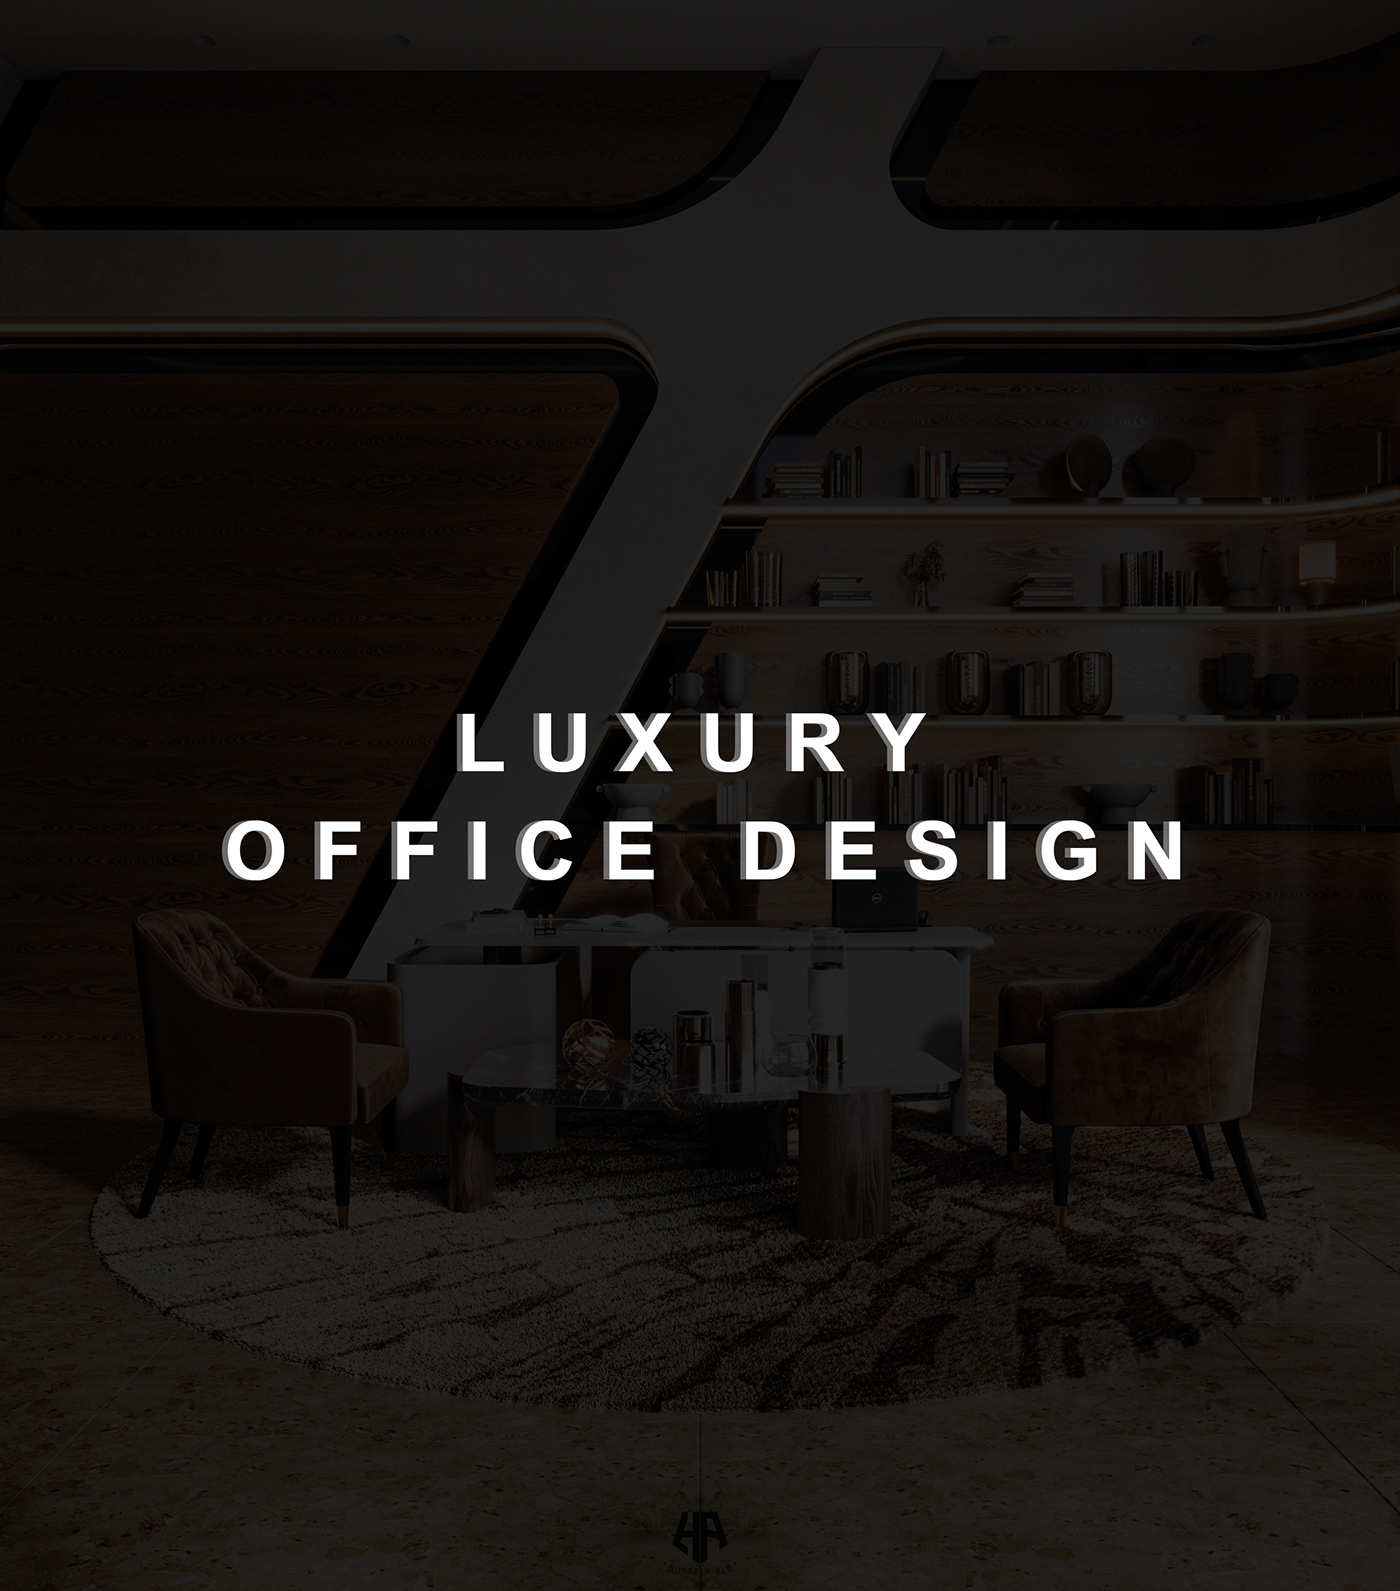 Office Office Design commercial workspace luxury modern visualization concept creative Intrerior design